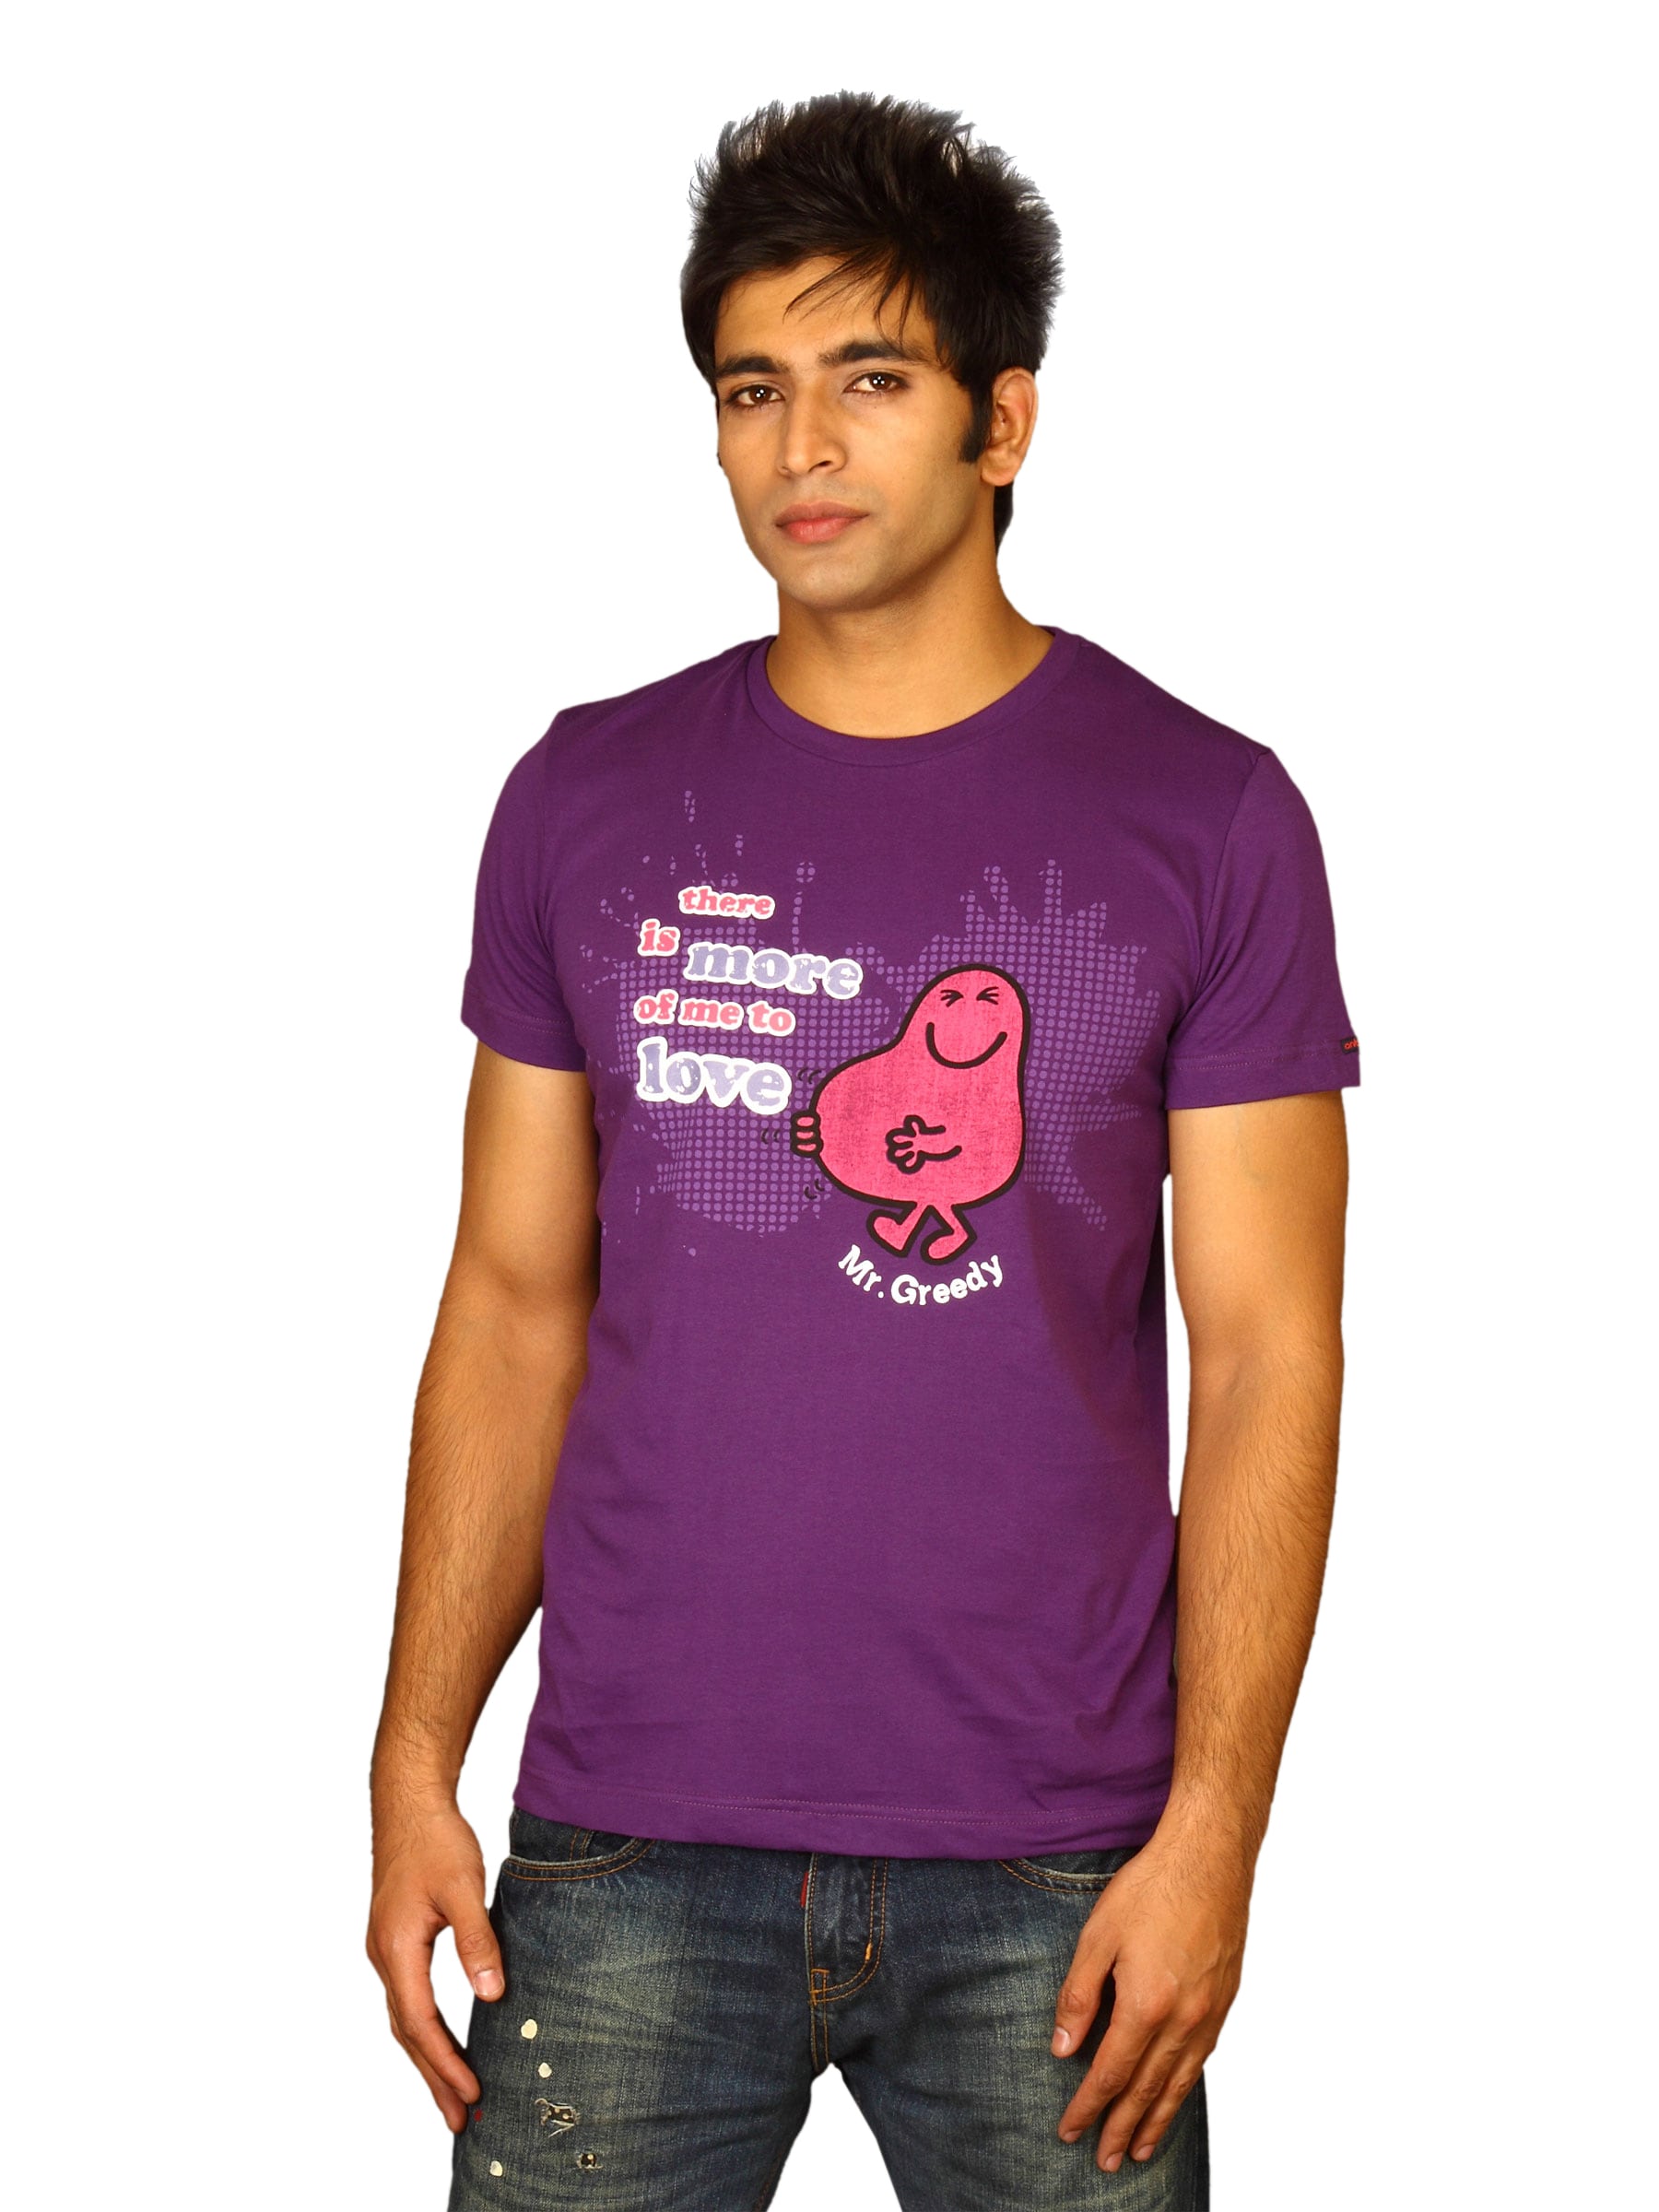 Mr.Men Men's Is There More Love Purple T-shirt